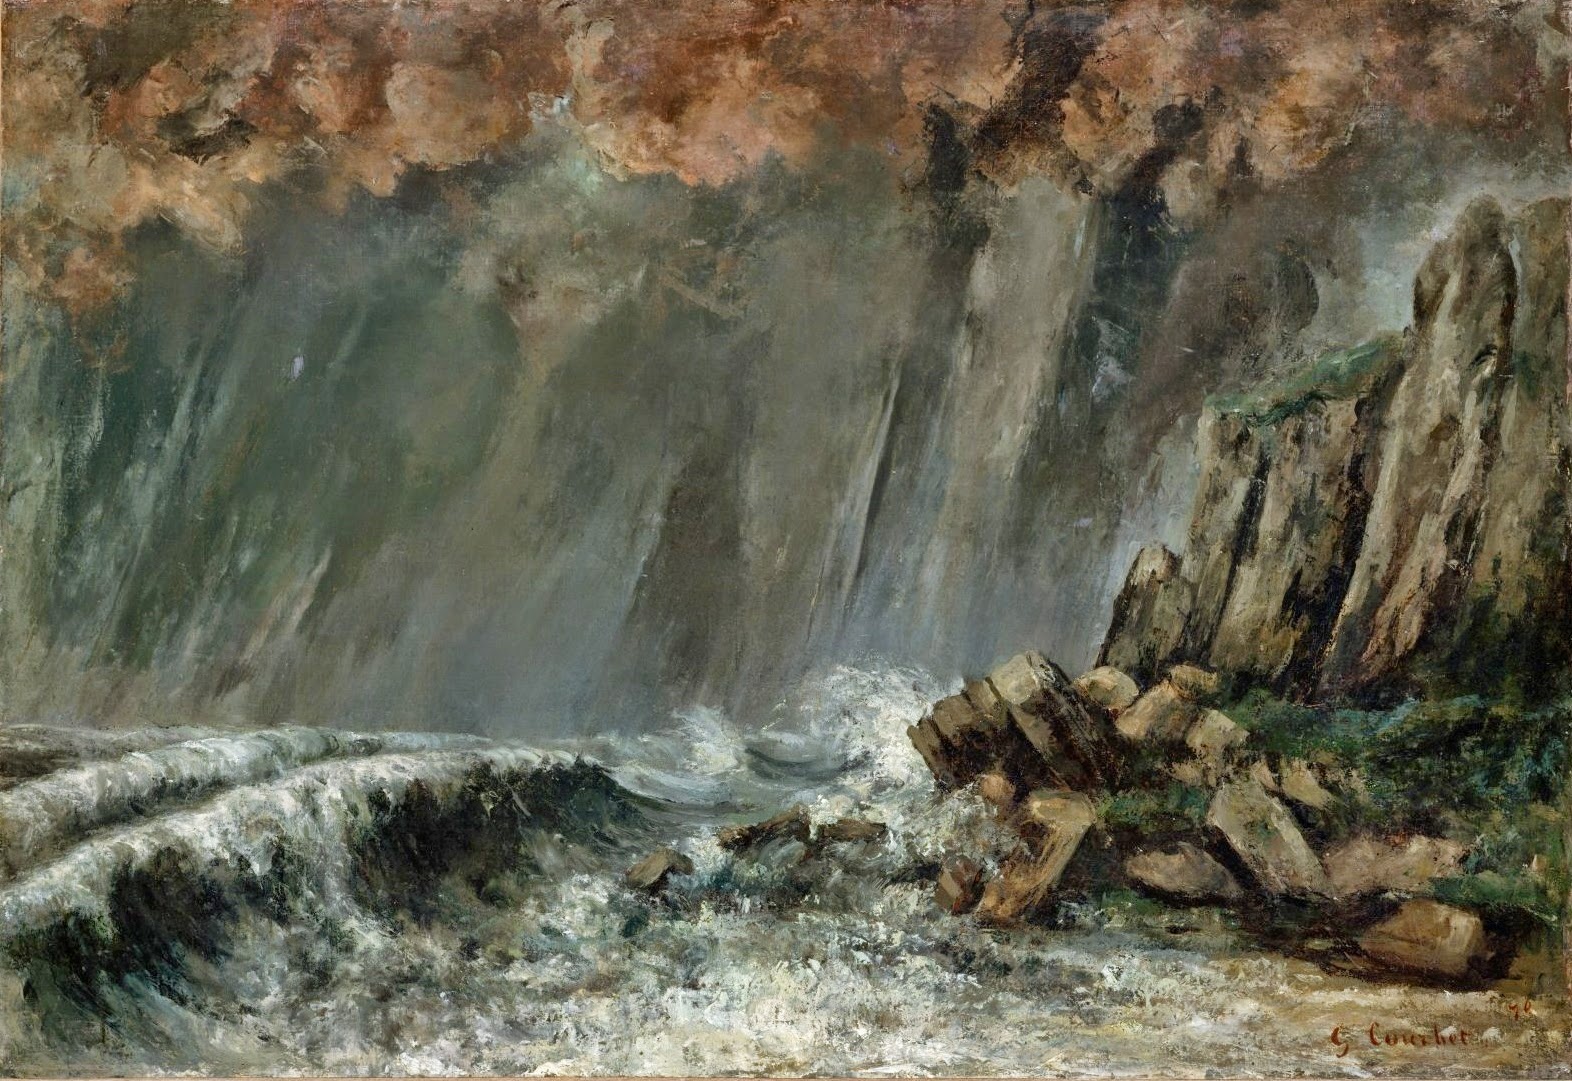 Gustave+Courbet-1819-1877 (35).jpg